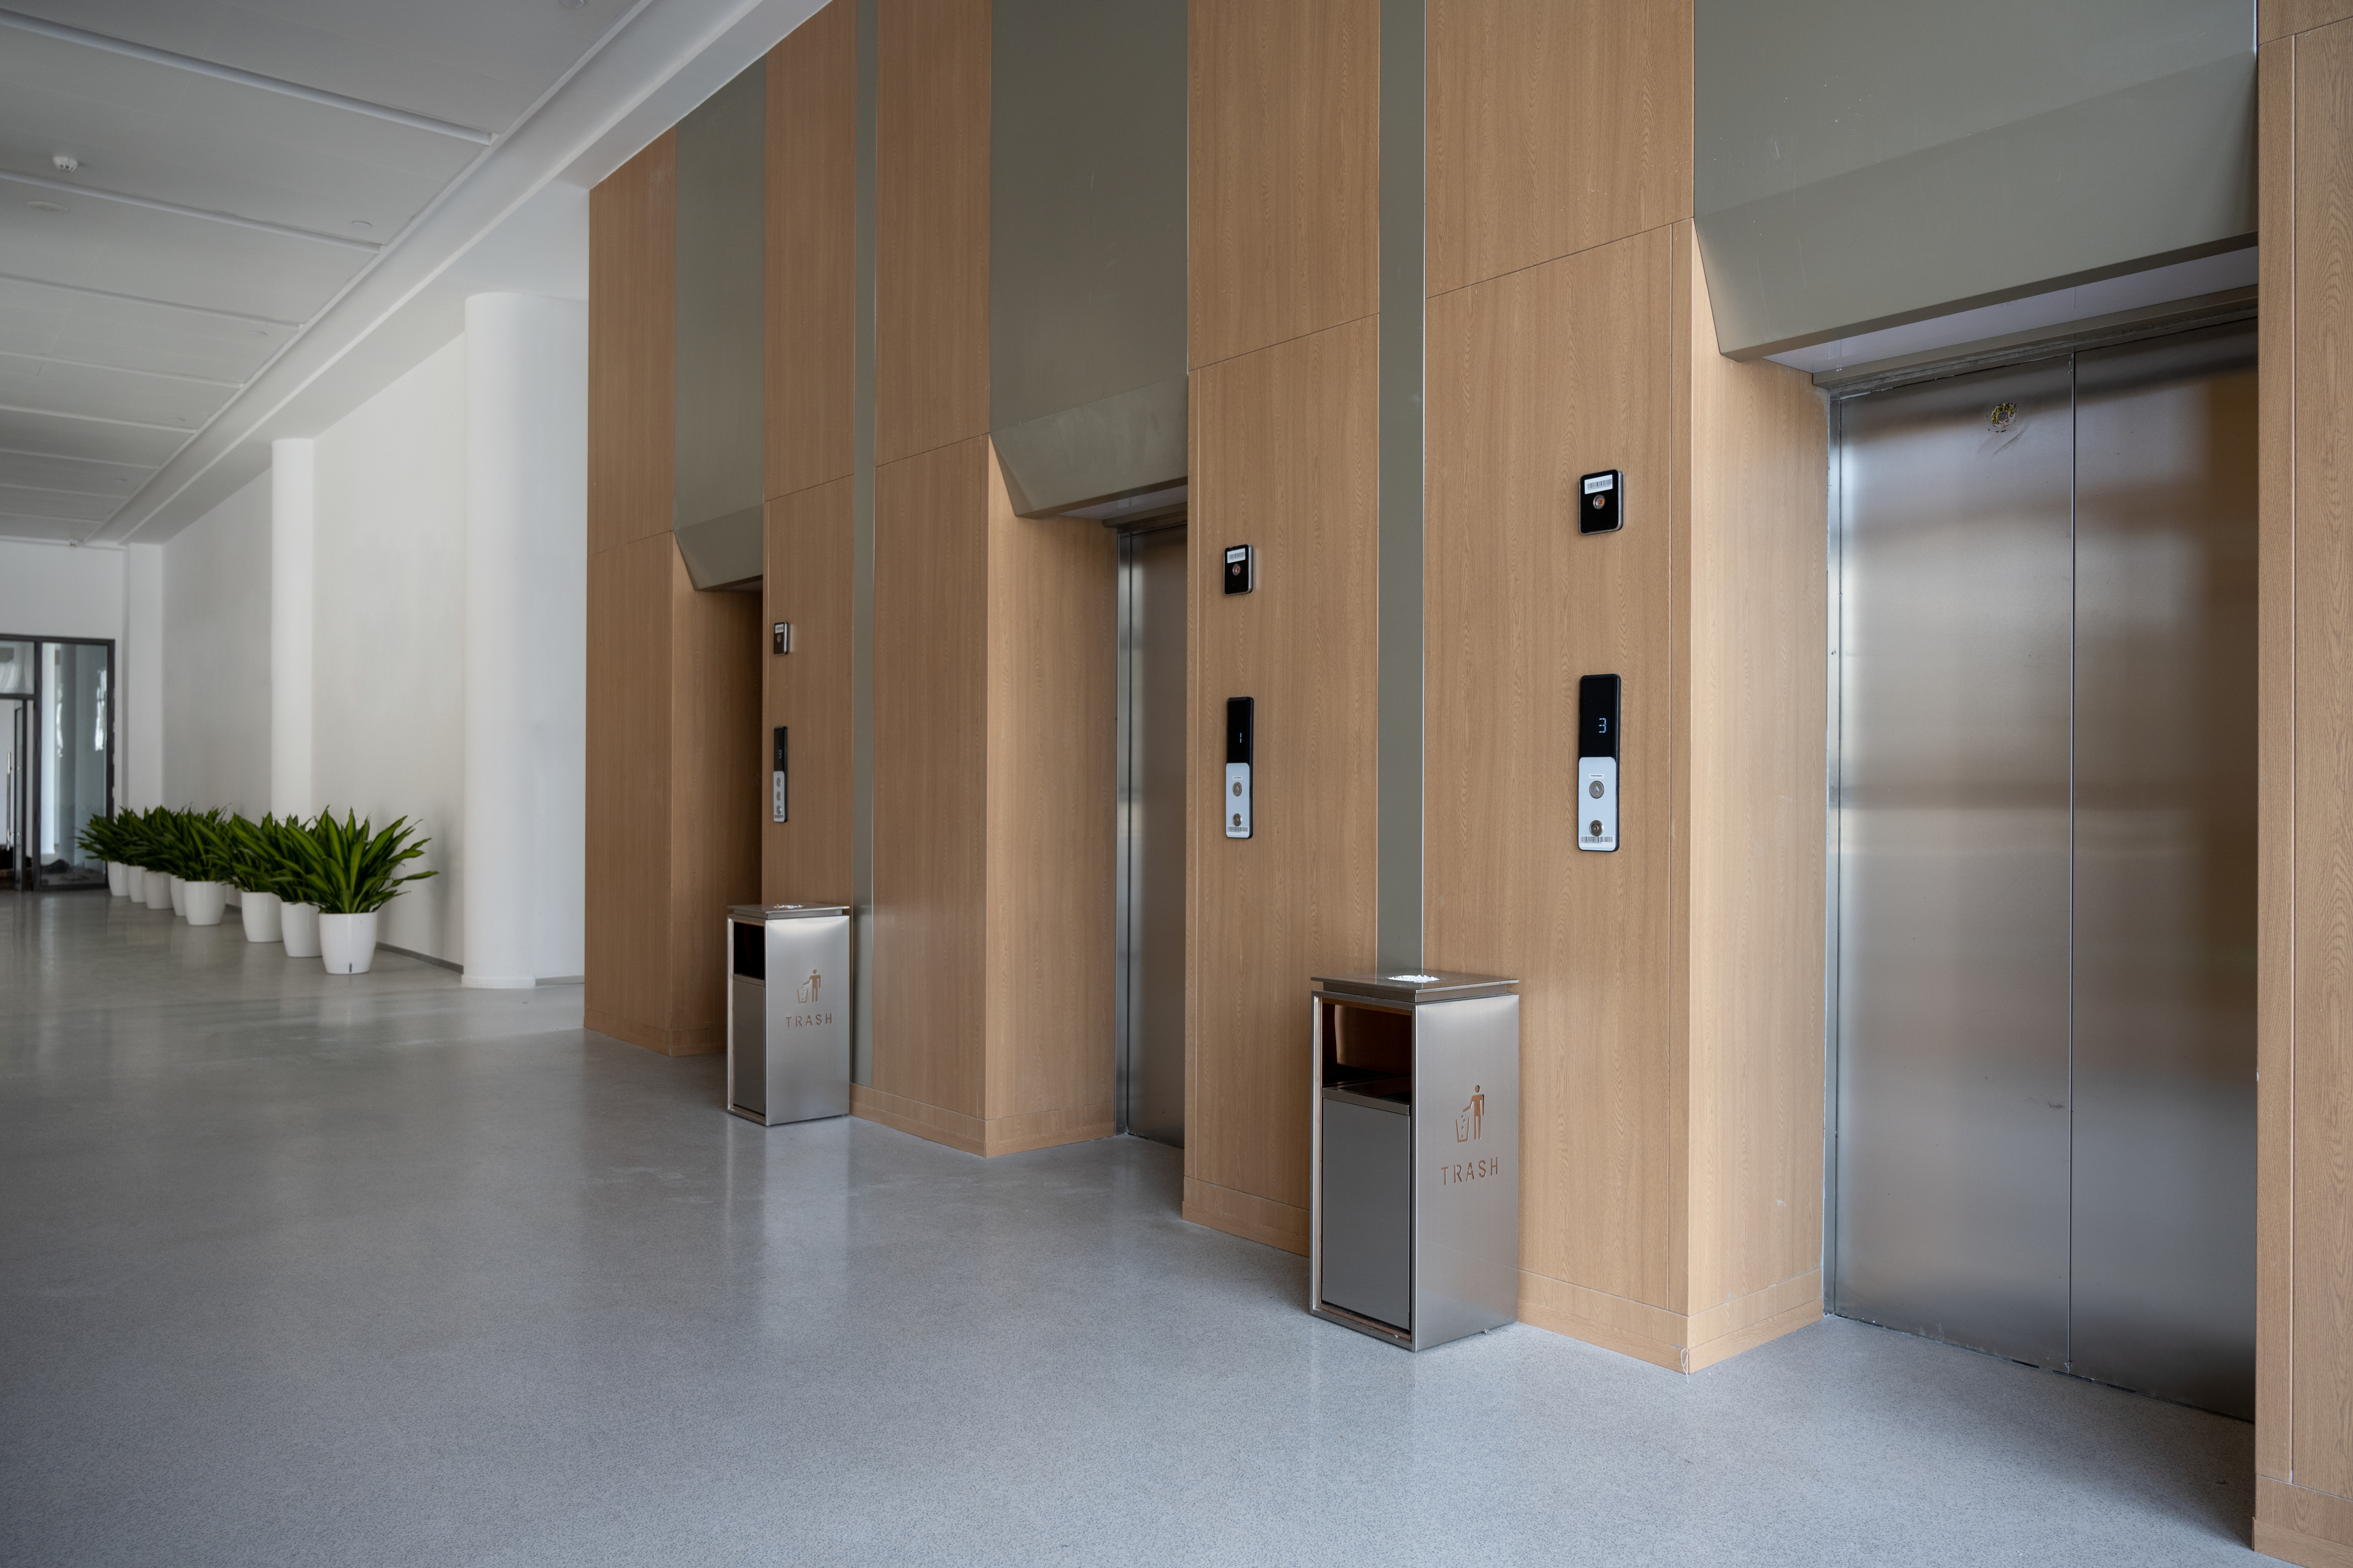 Three elevators with closed doors